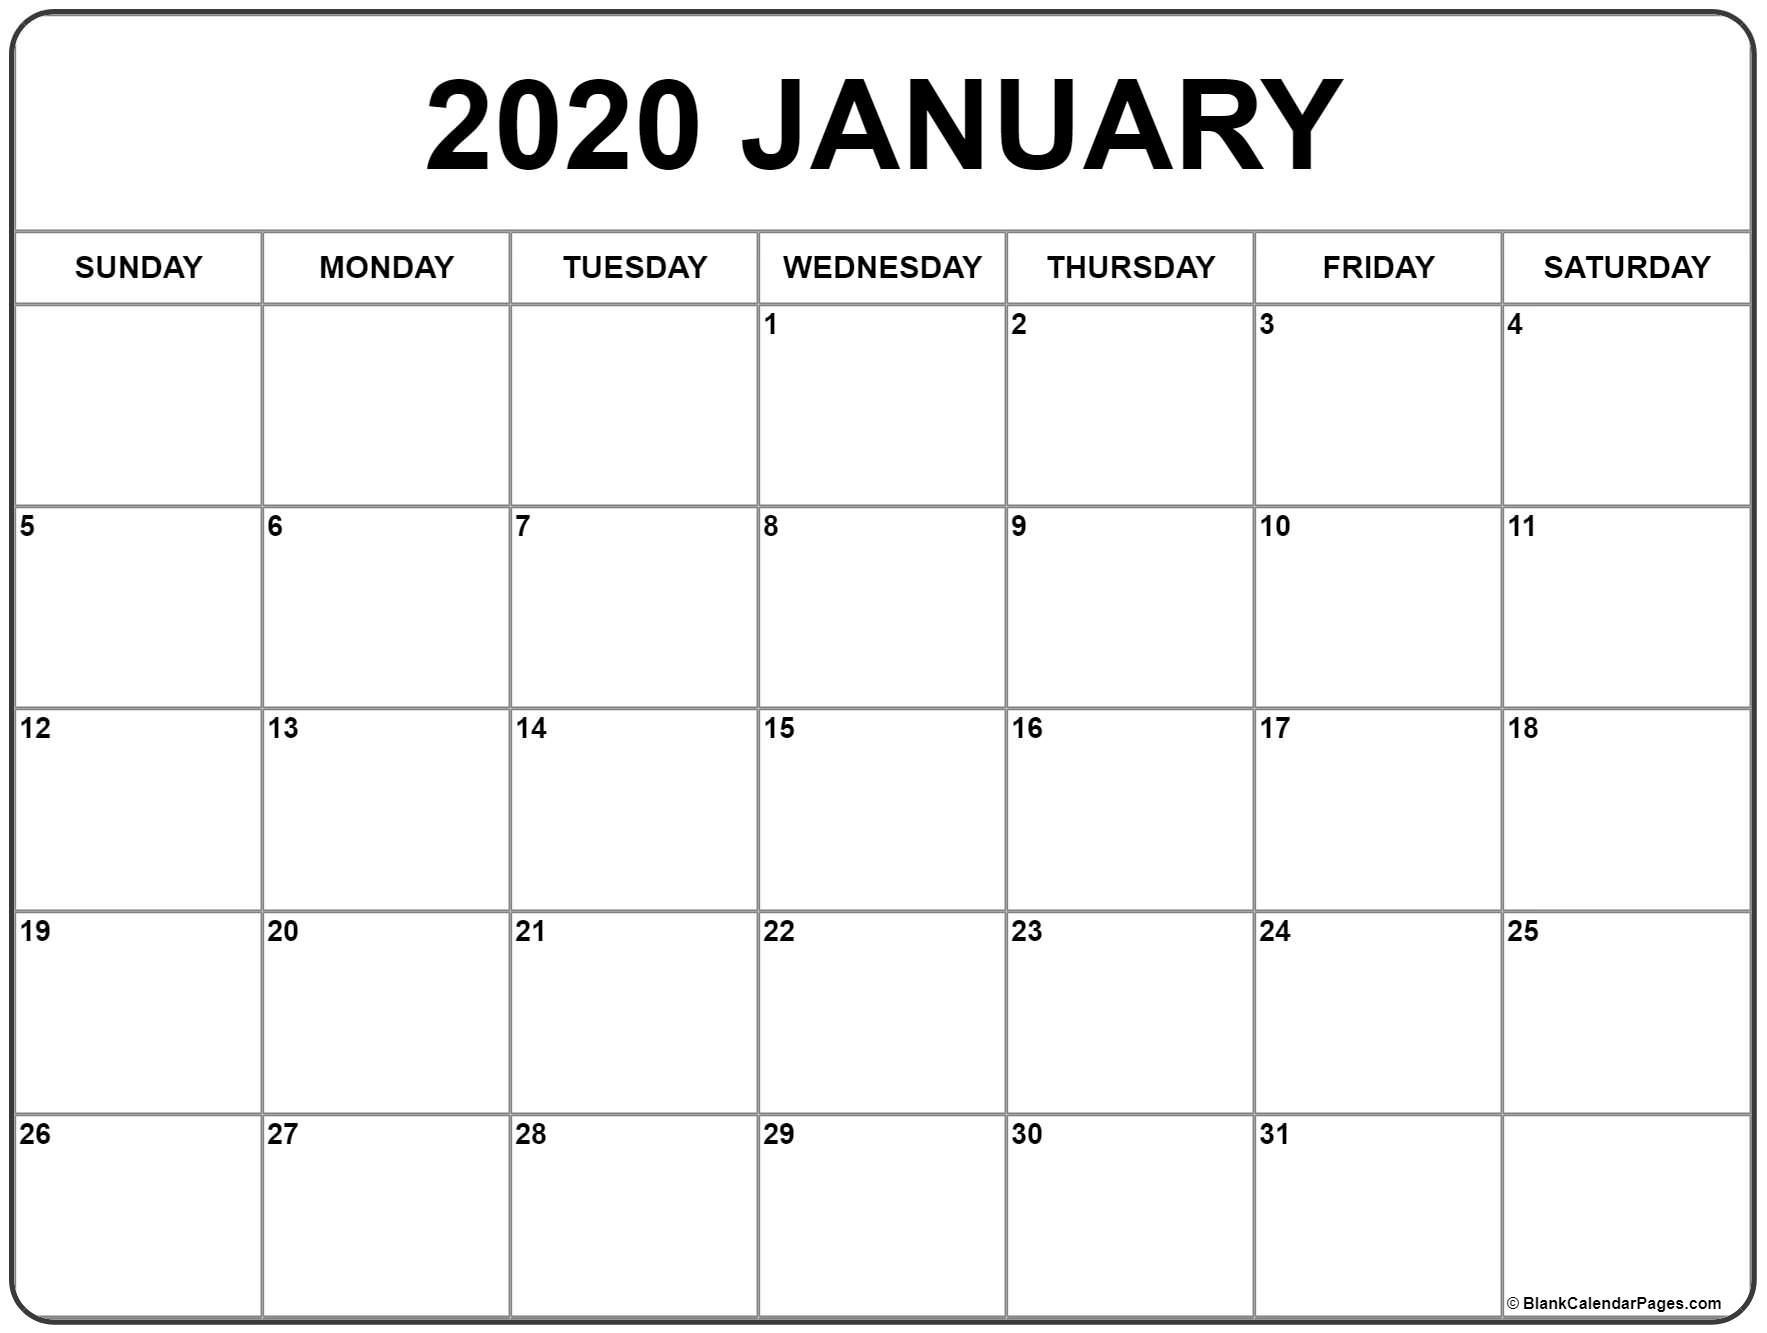 January 2020 Calendar | Free Printable Monthly Calendars-Month Of January 2020 Calendar